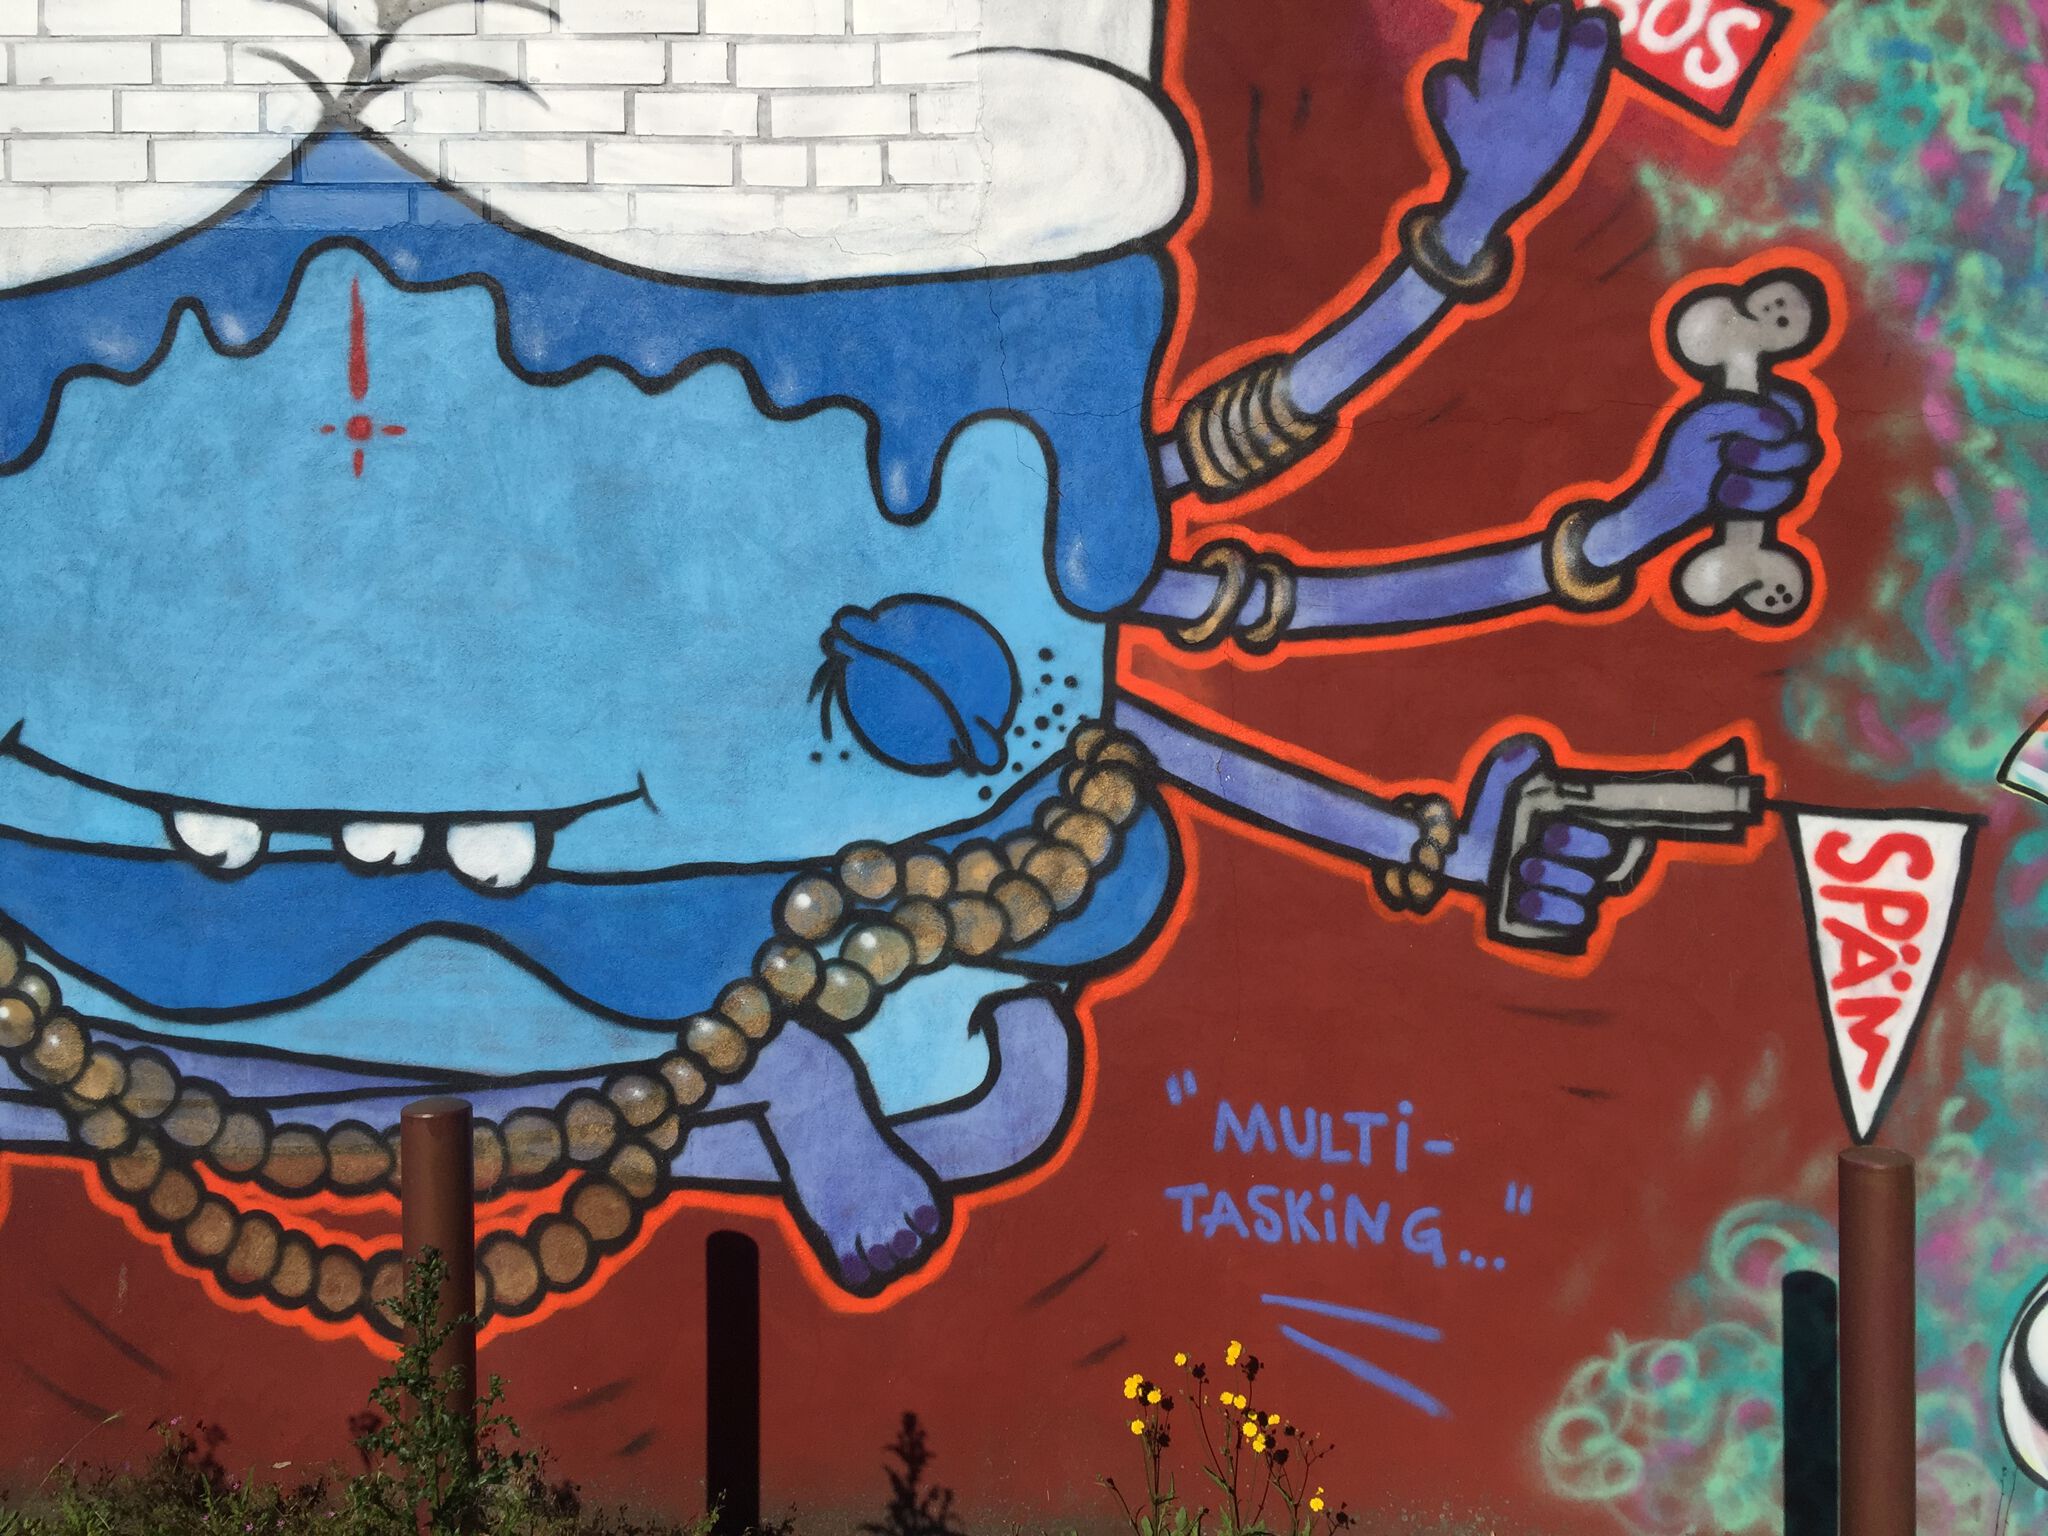 Späm, Solaris100, DraDra, Johniversum, KING#FF_ART, 10tacle, Angry Koala, HKDNS, Marshal Arts&mdash;Backyard with various murals